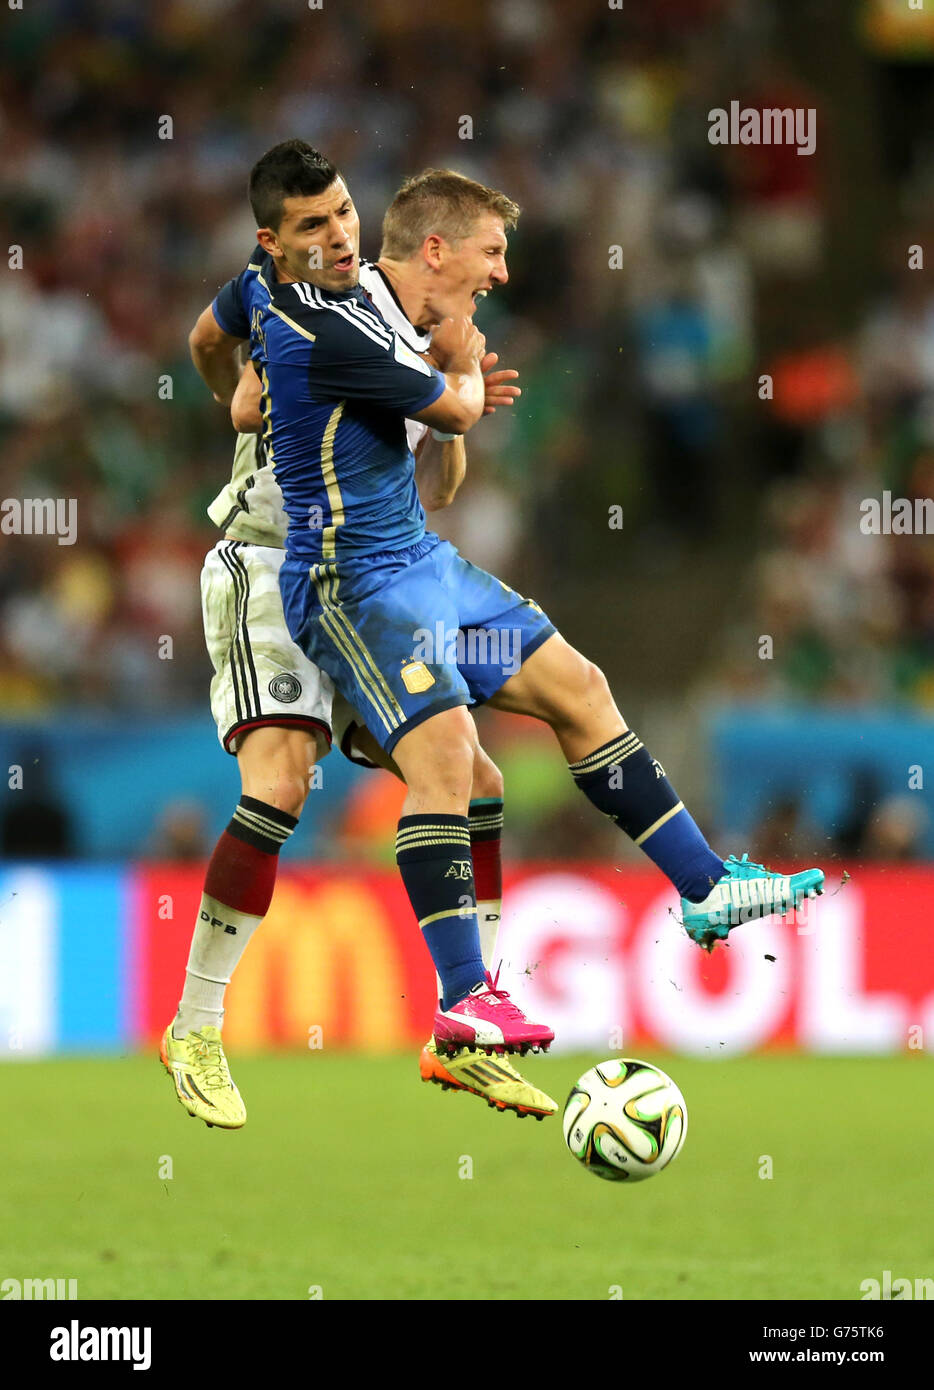 Soccer - FIFA World Cup 2014 - Final - Germany v Argentina - Estadio do Maracana. Germany's Bastian Schweinsteiger (right) collides with Argentina's Sergio Aguero Stock Photo